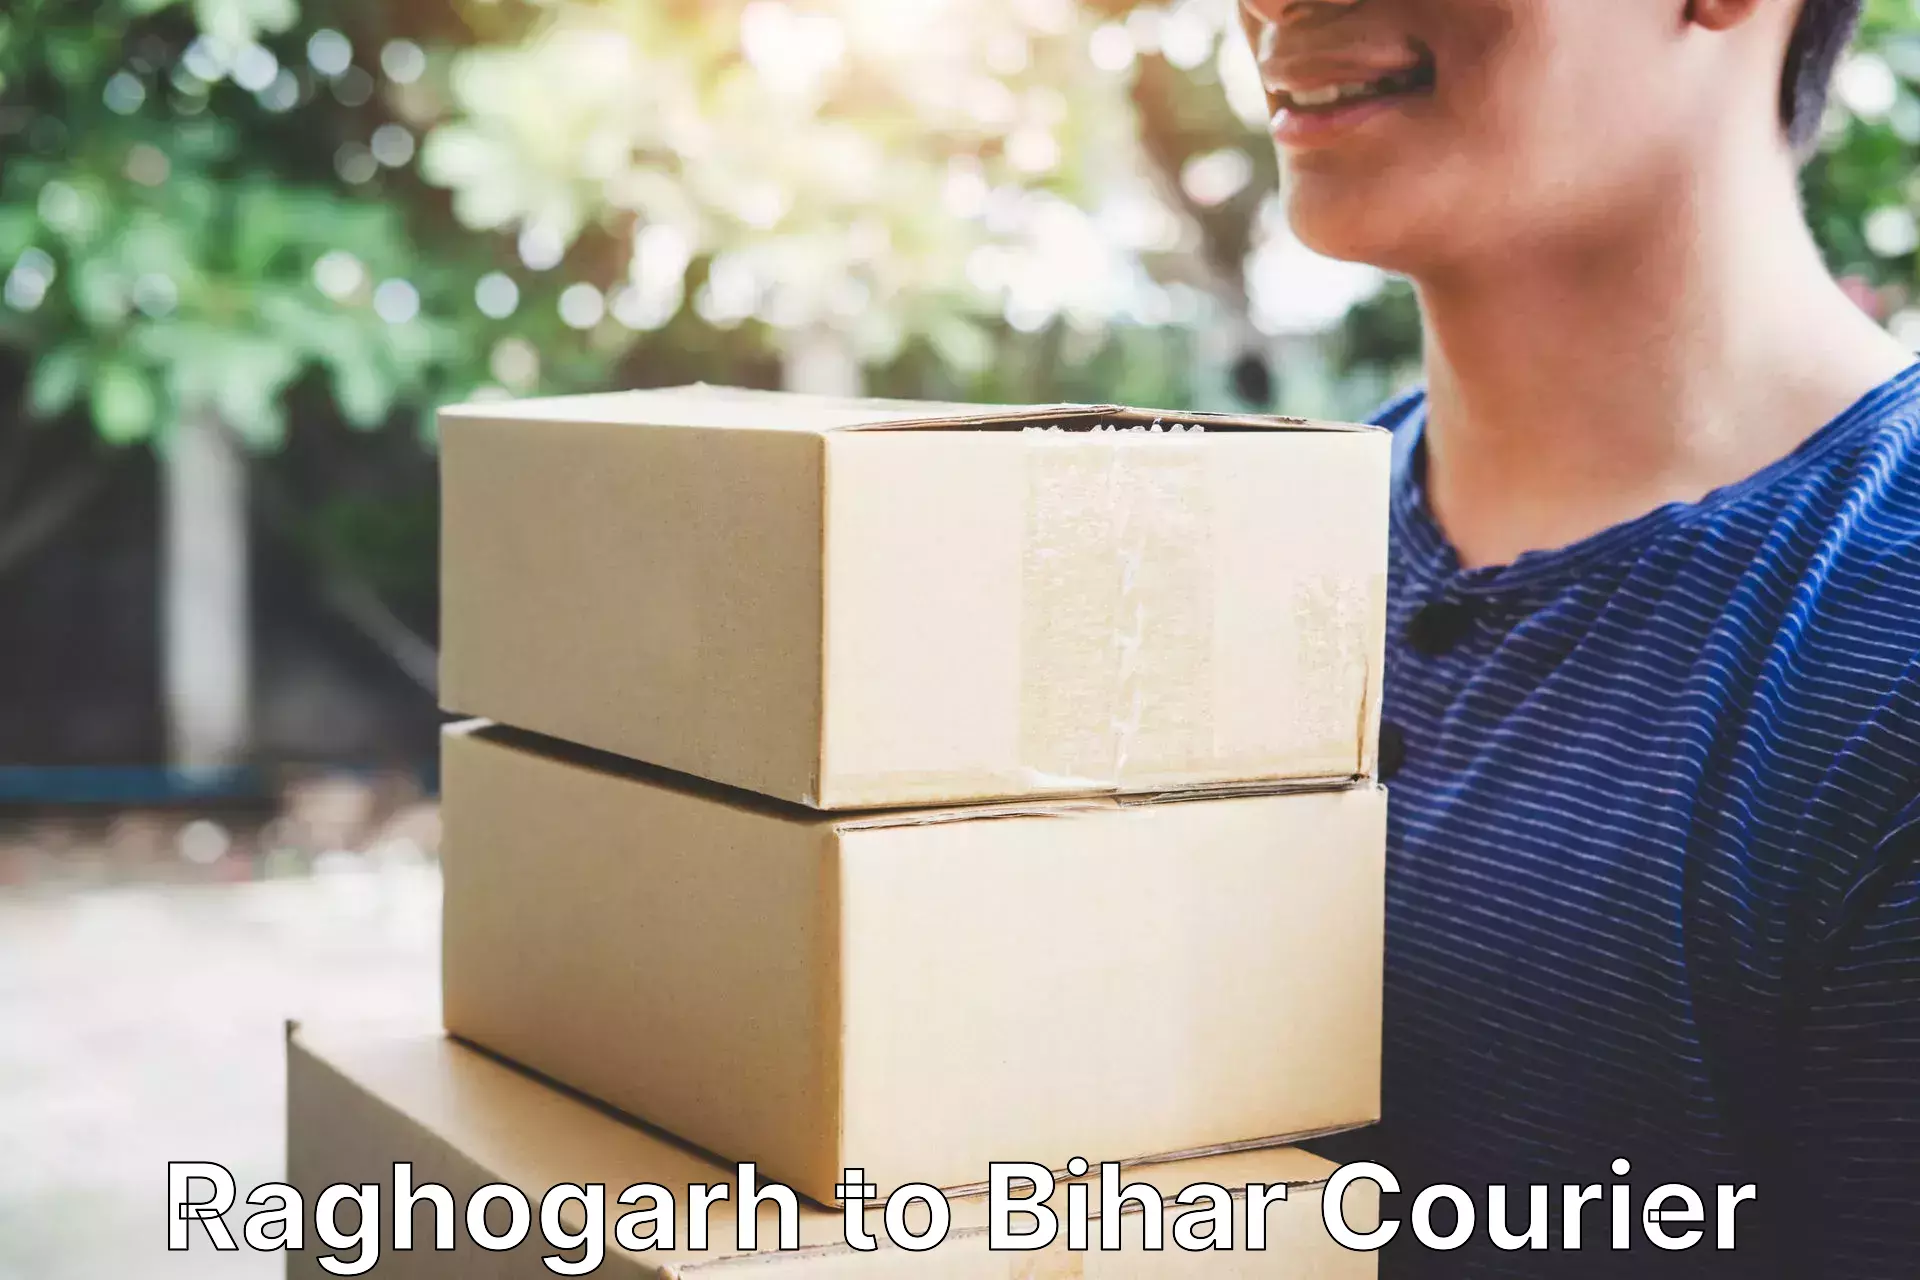 Courier service partnerships Raghogarh to Bihar